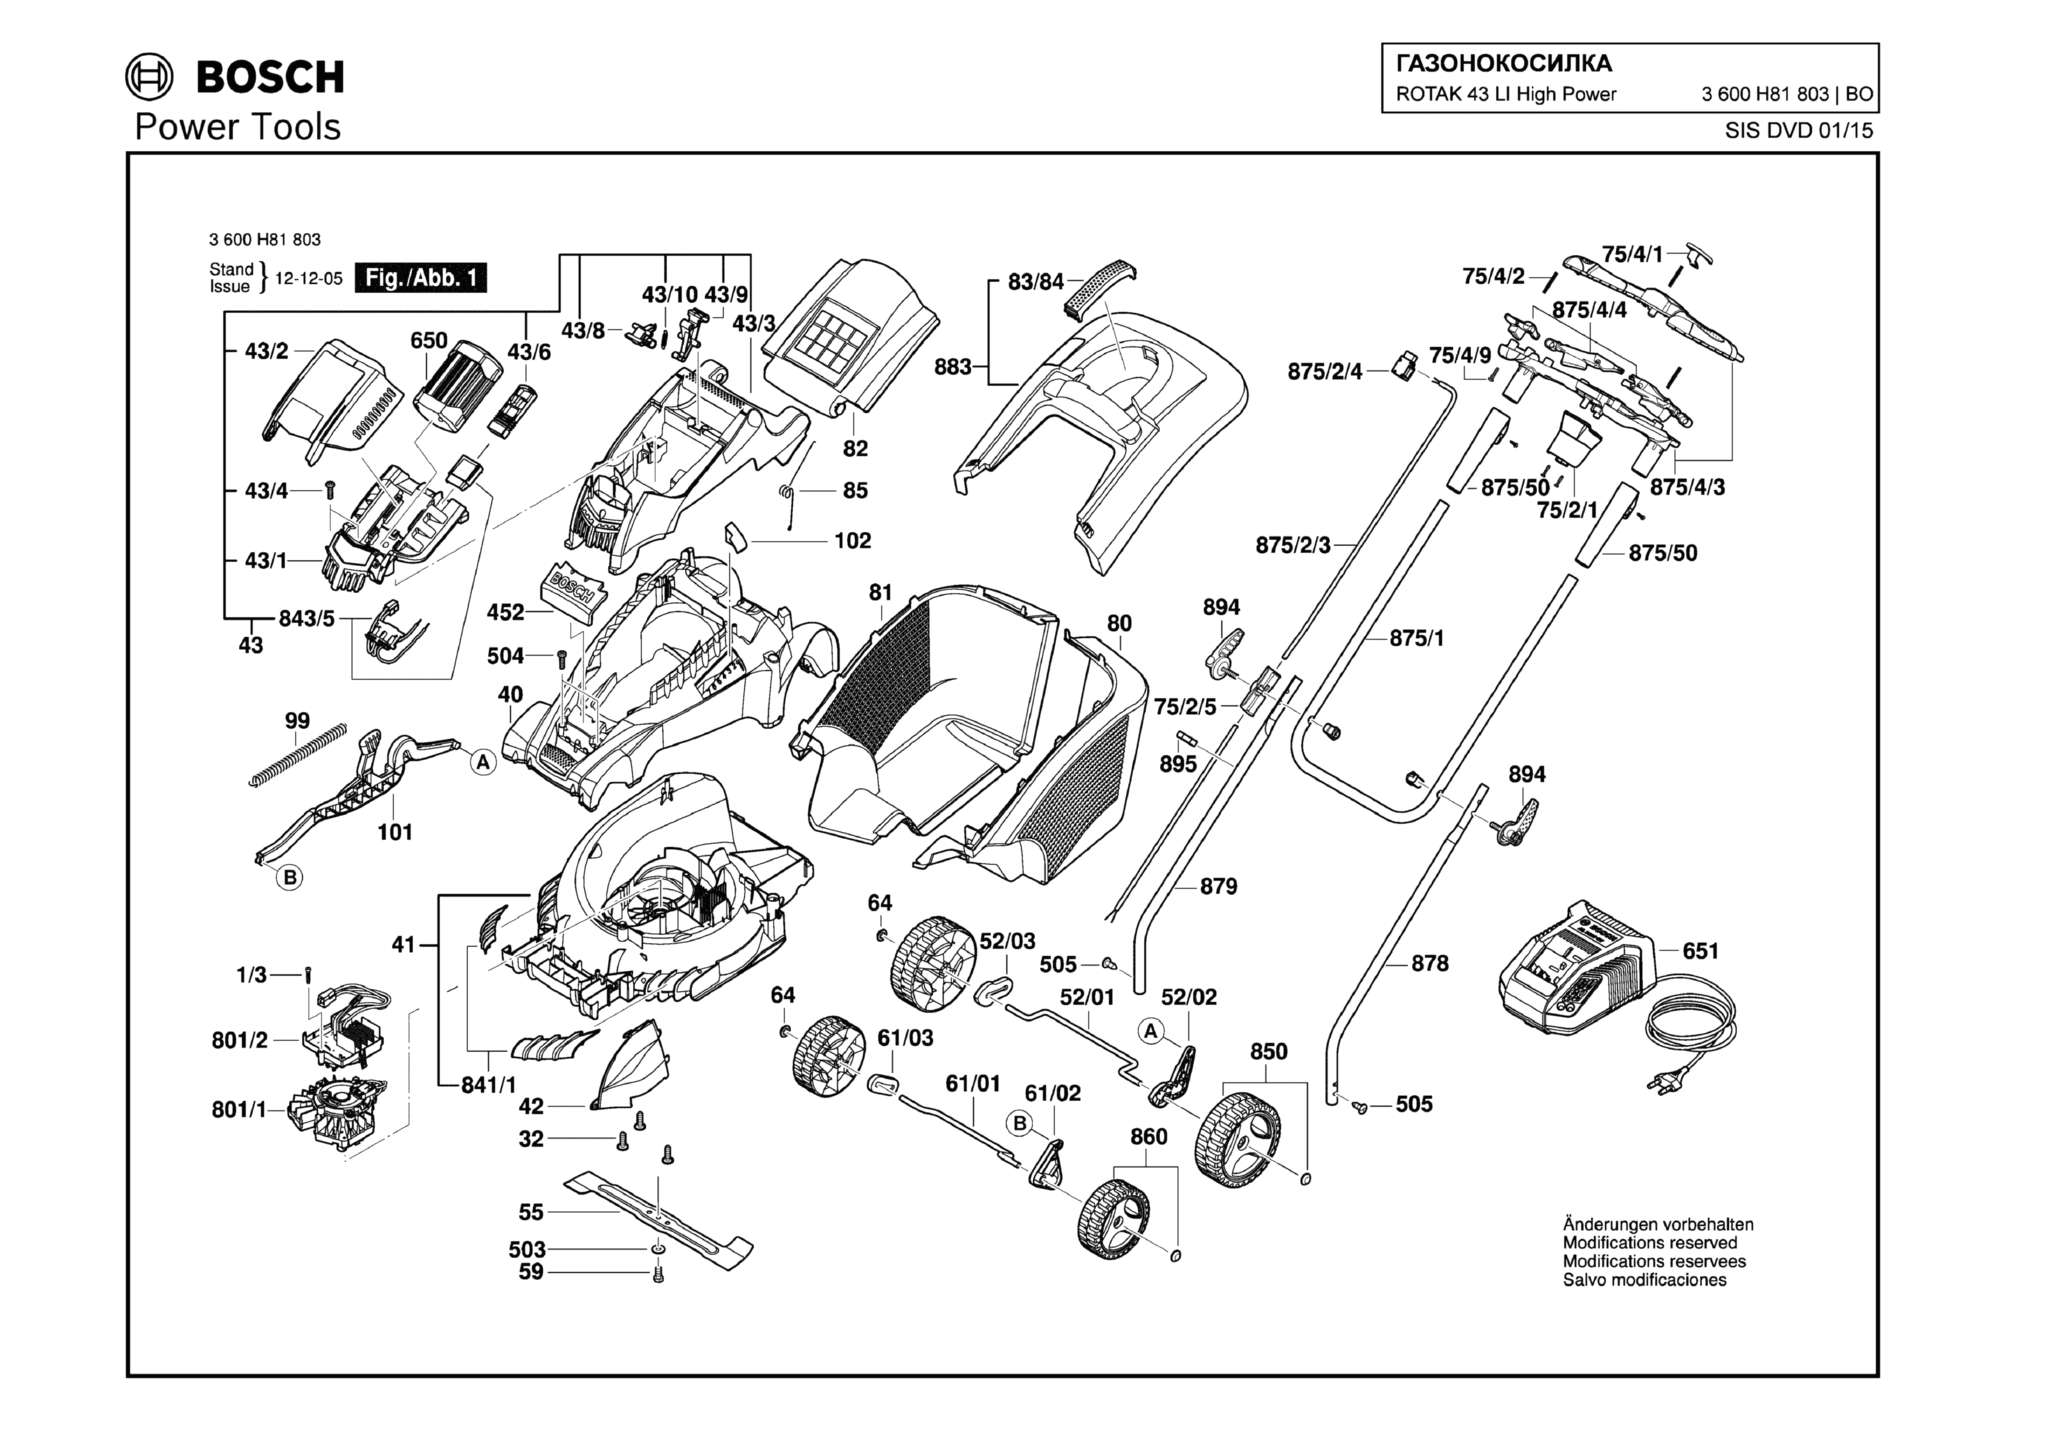 Запчасти, схема и деталировка Bosch ROTAK 43 LI HIGH POWER (ТИП 3600H81803)